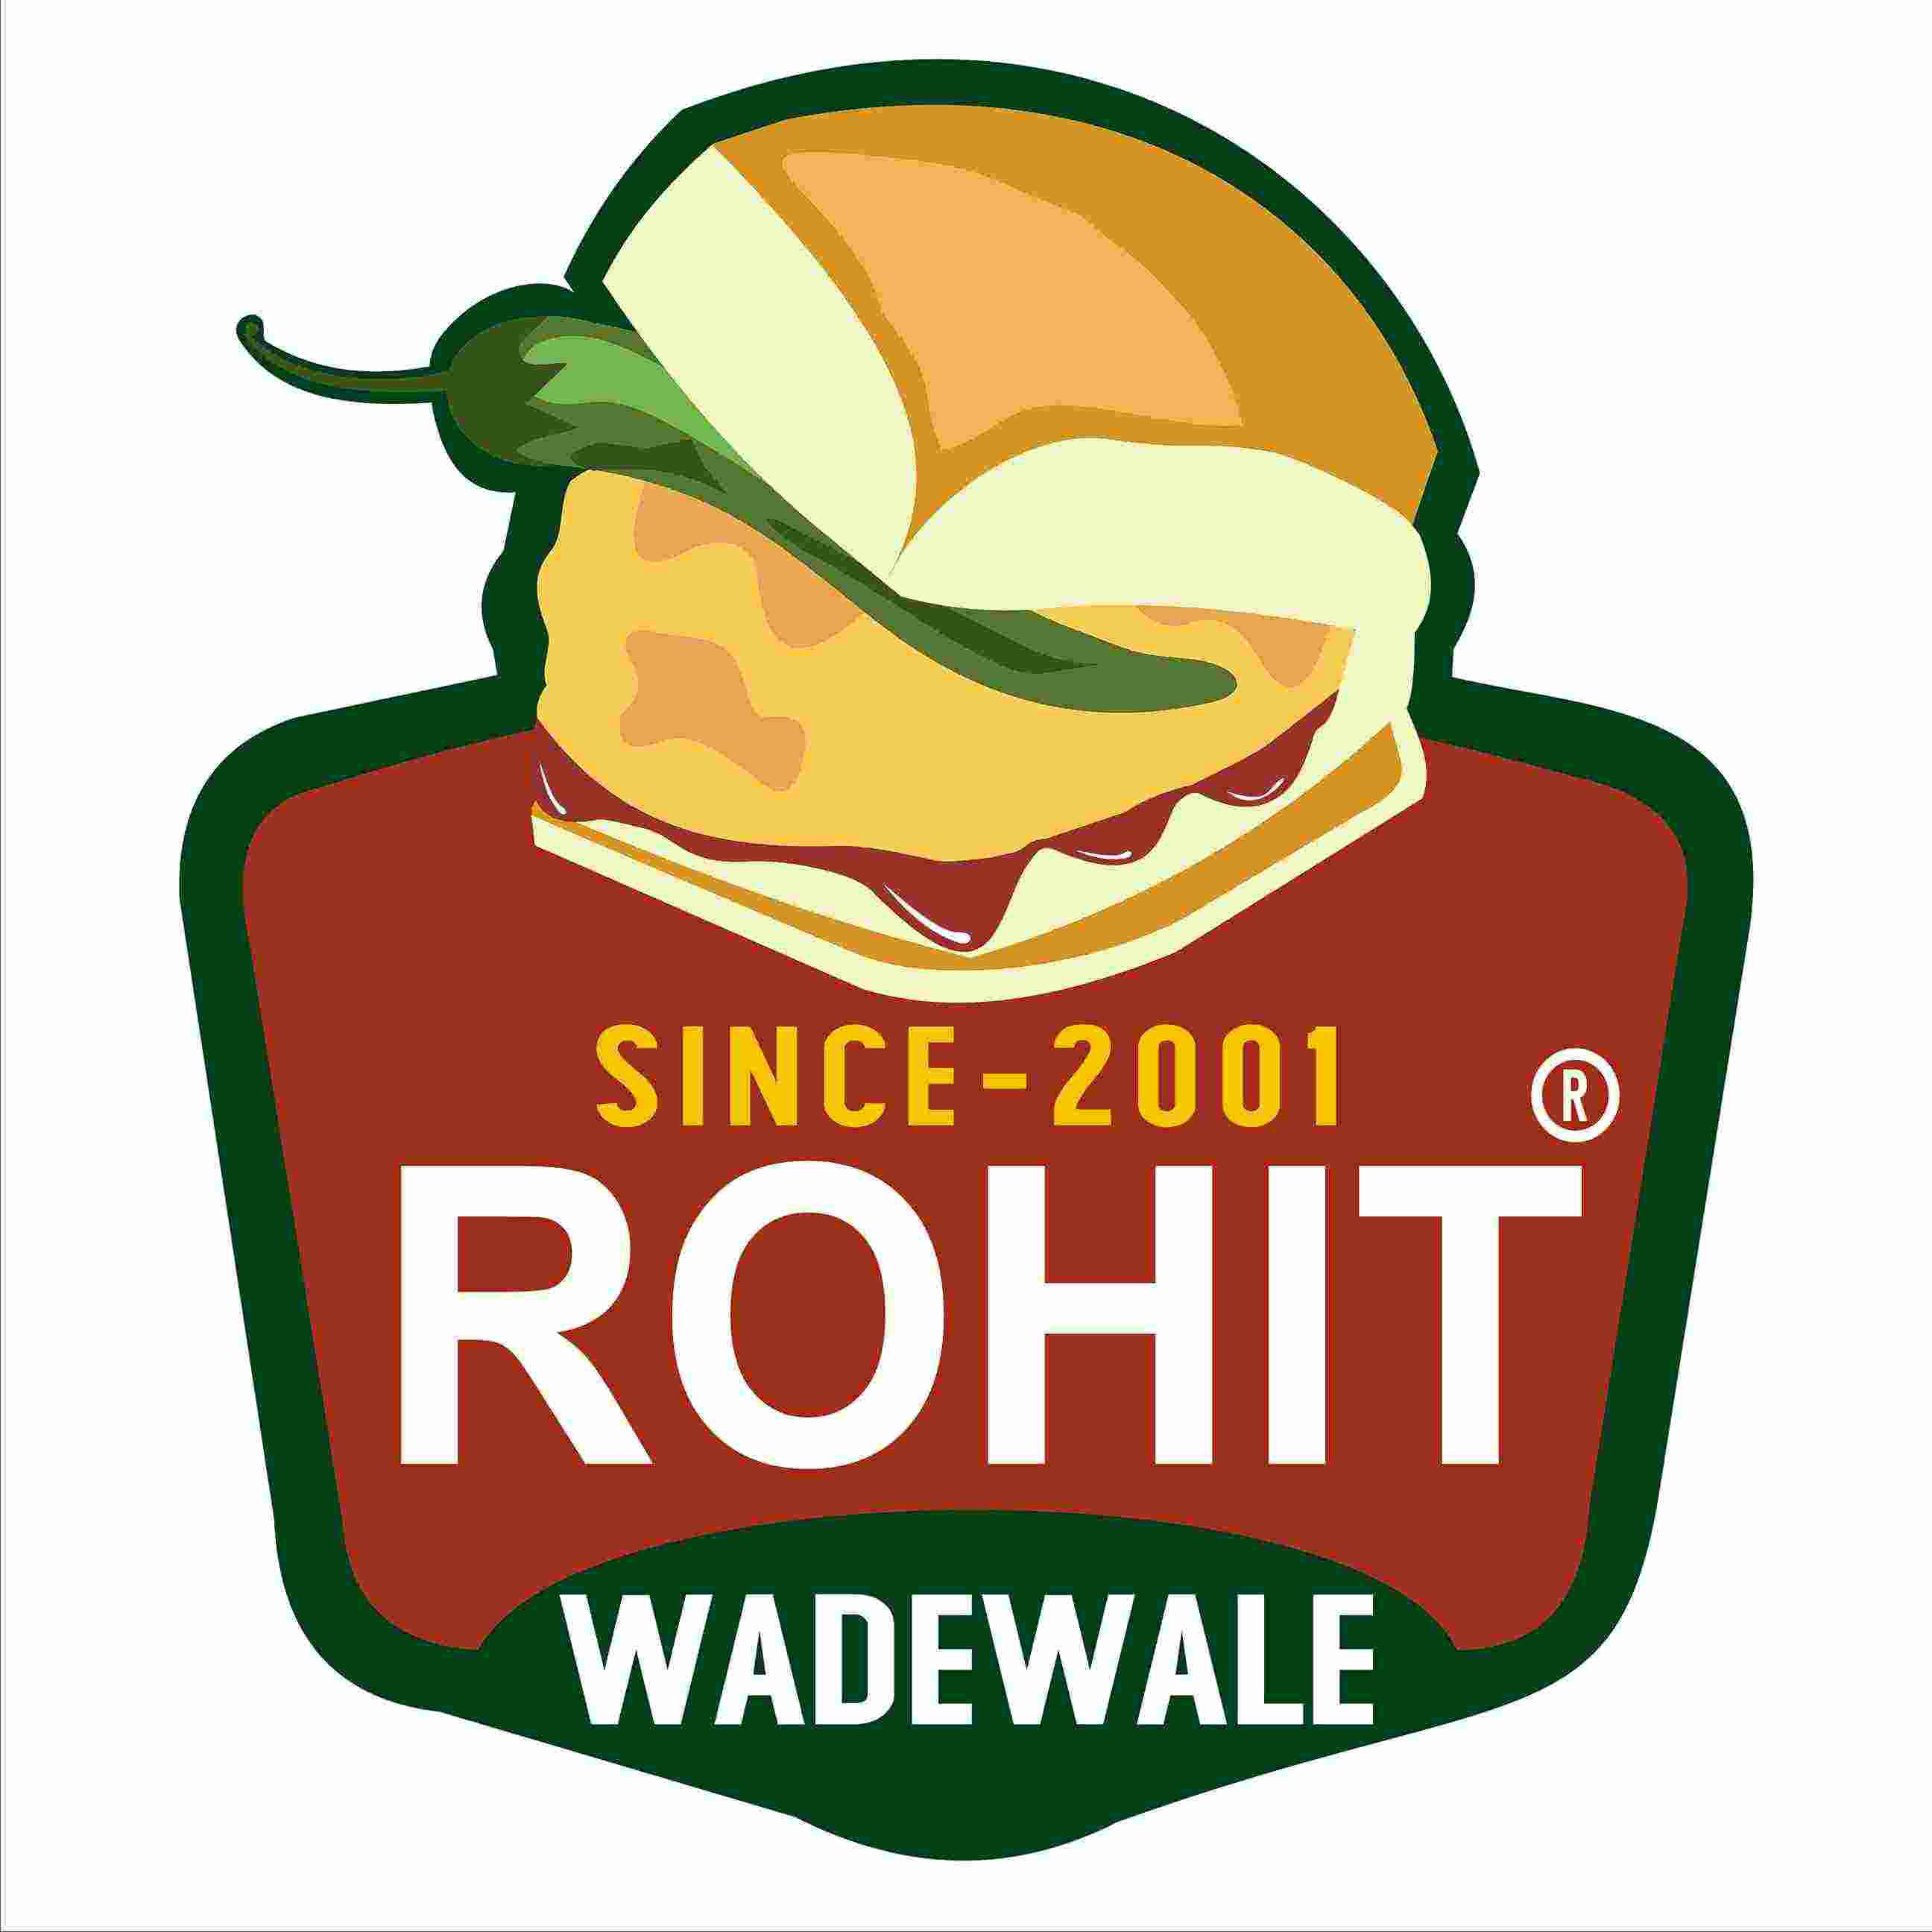 Rohit wadewale 